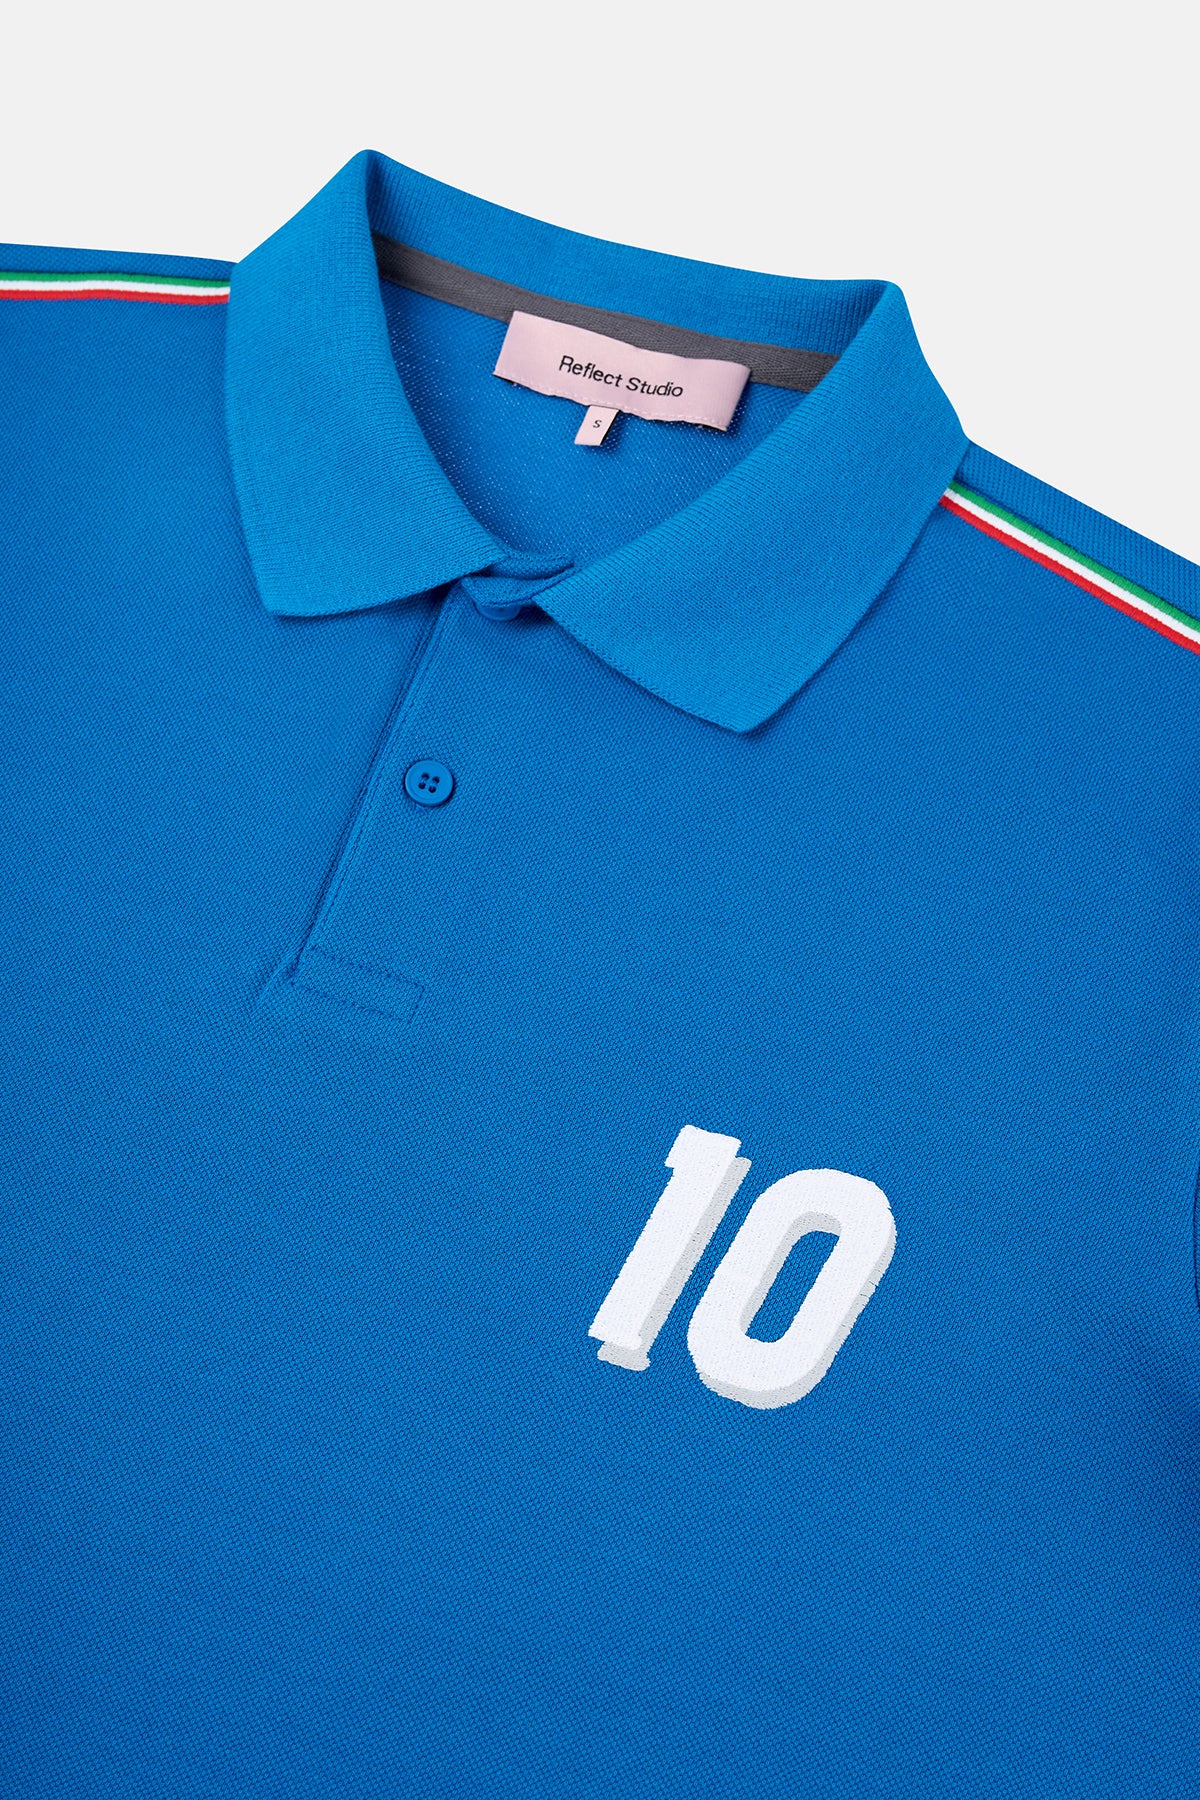 Italy 10 Polo T-shirt - Lacivert